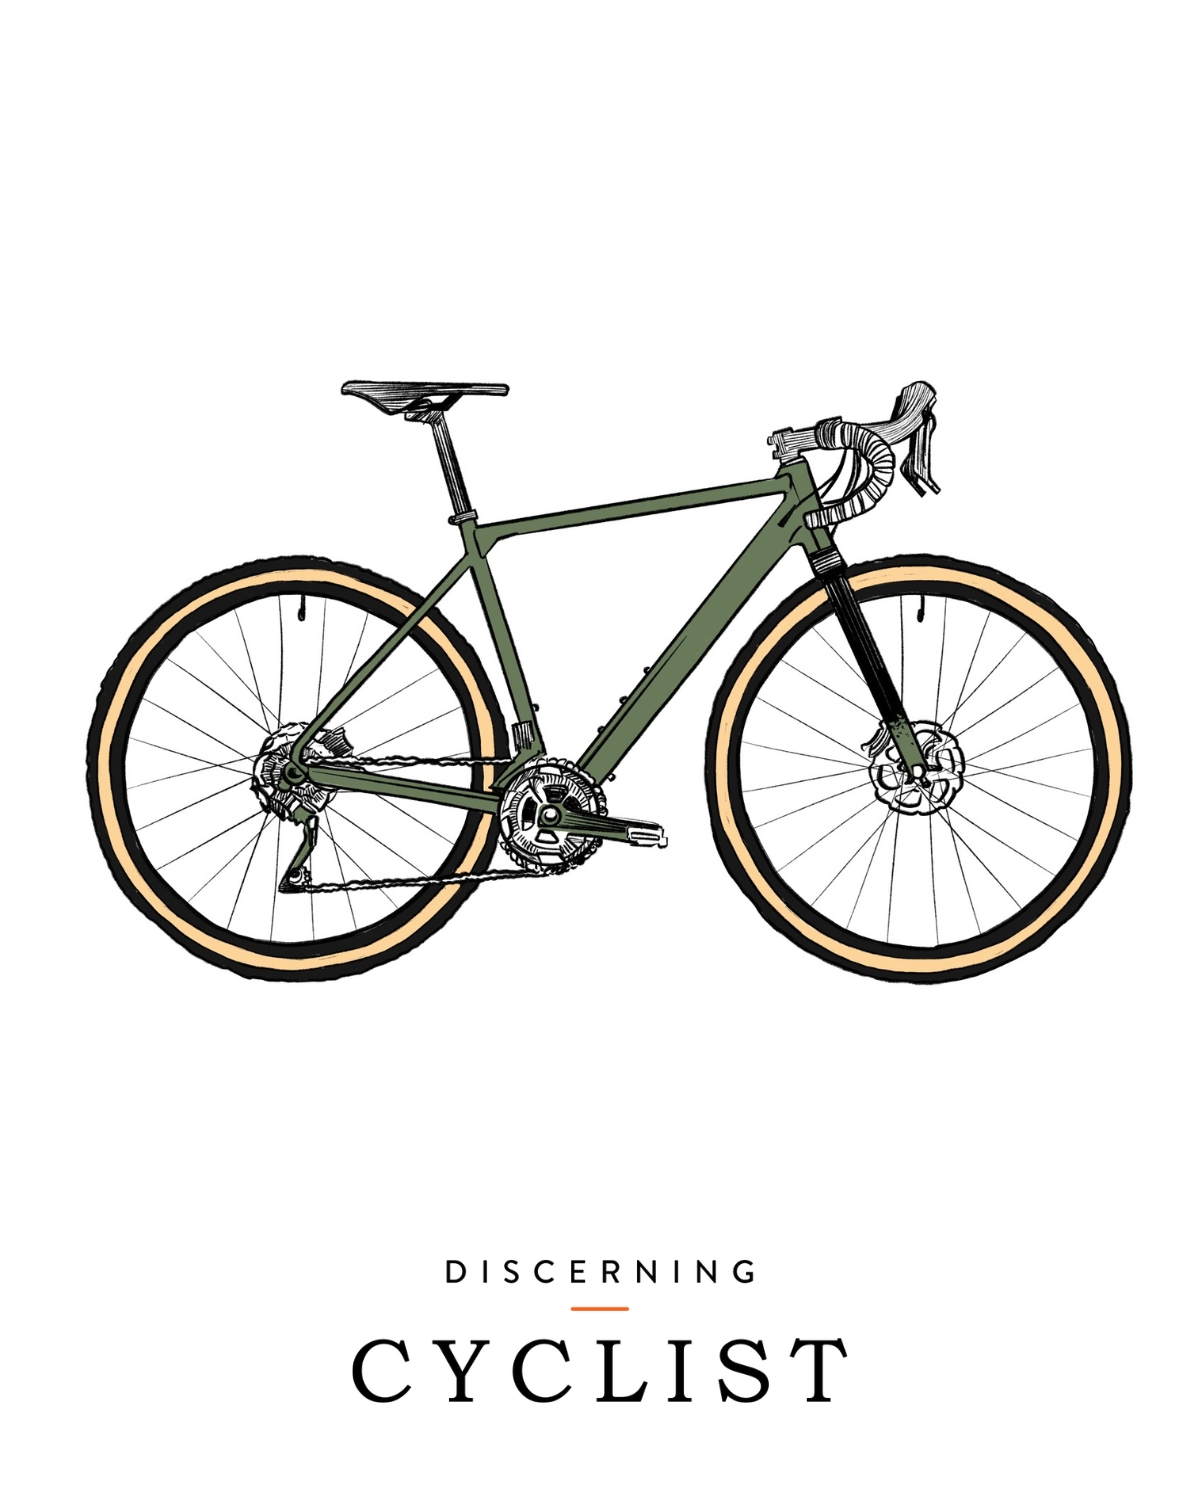 Gravel velocipede illustration